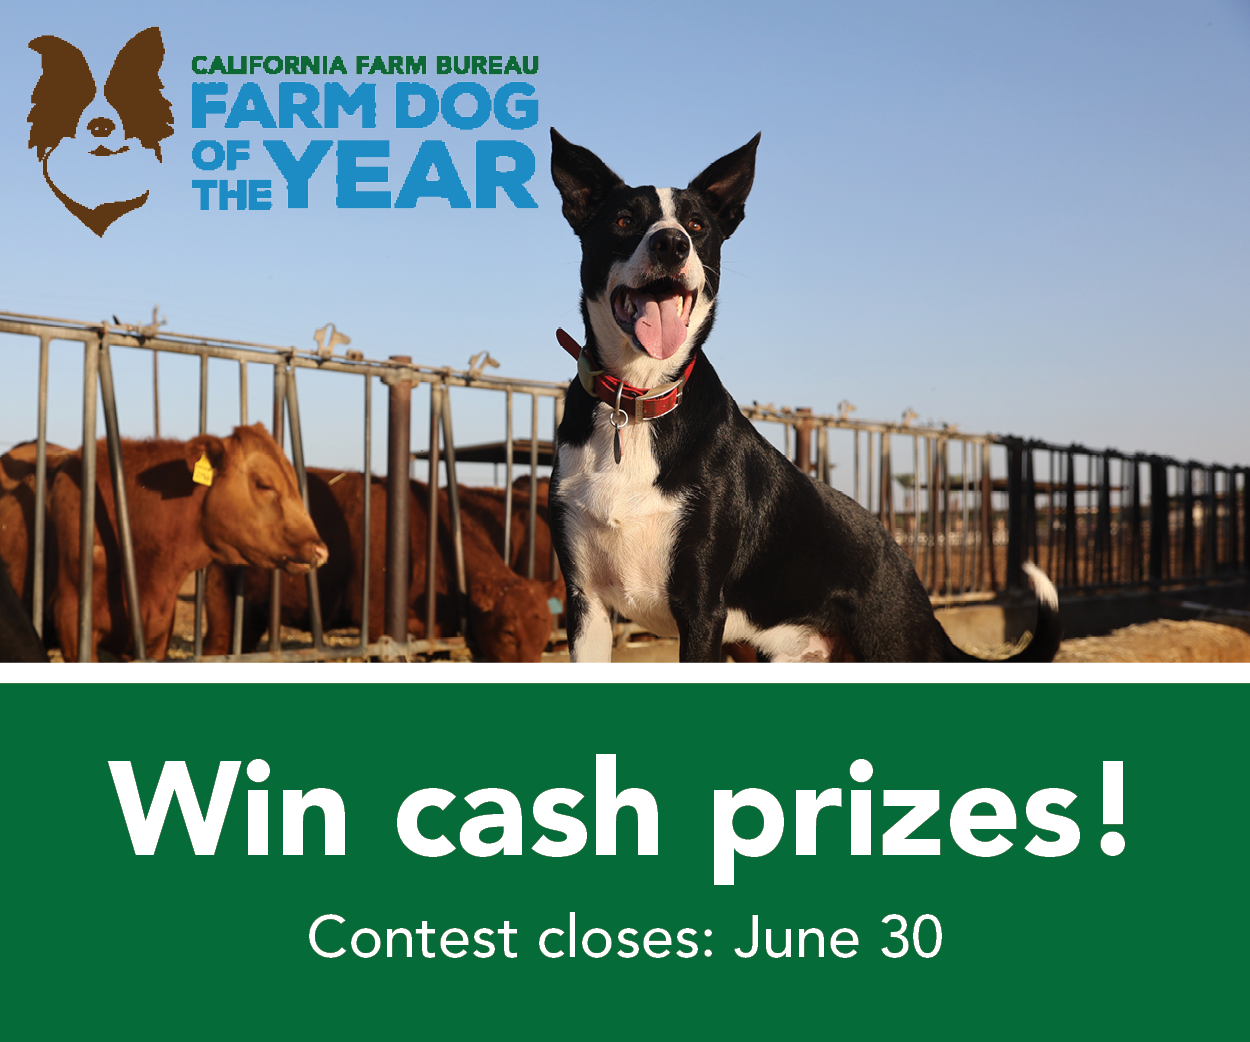 Enter the Farm Dog Contest